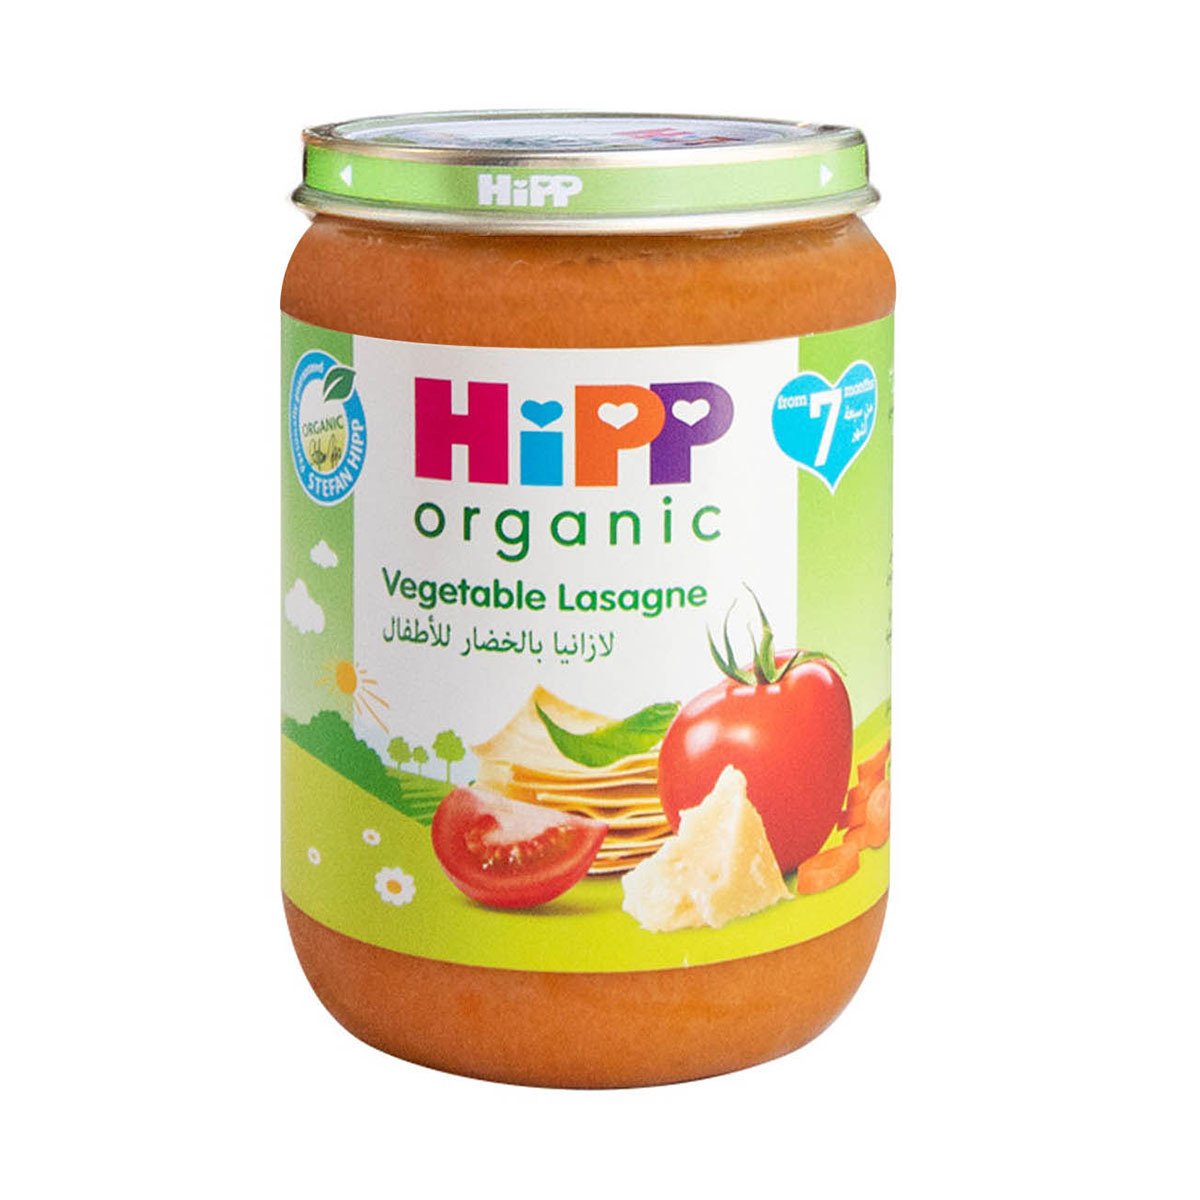 Hipp Organic Vegetable Lasagne 190 g